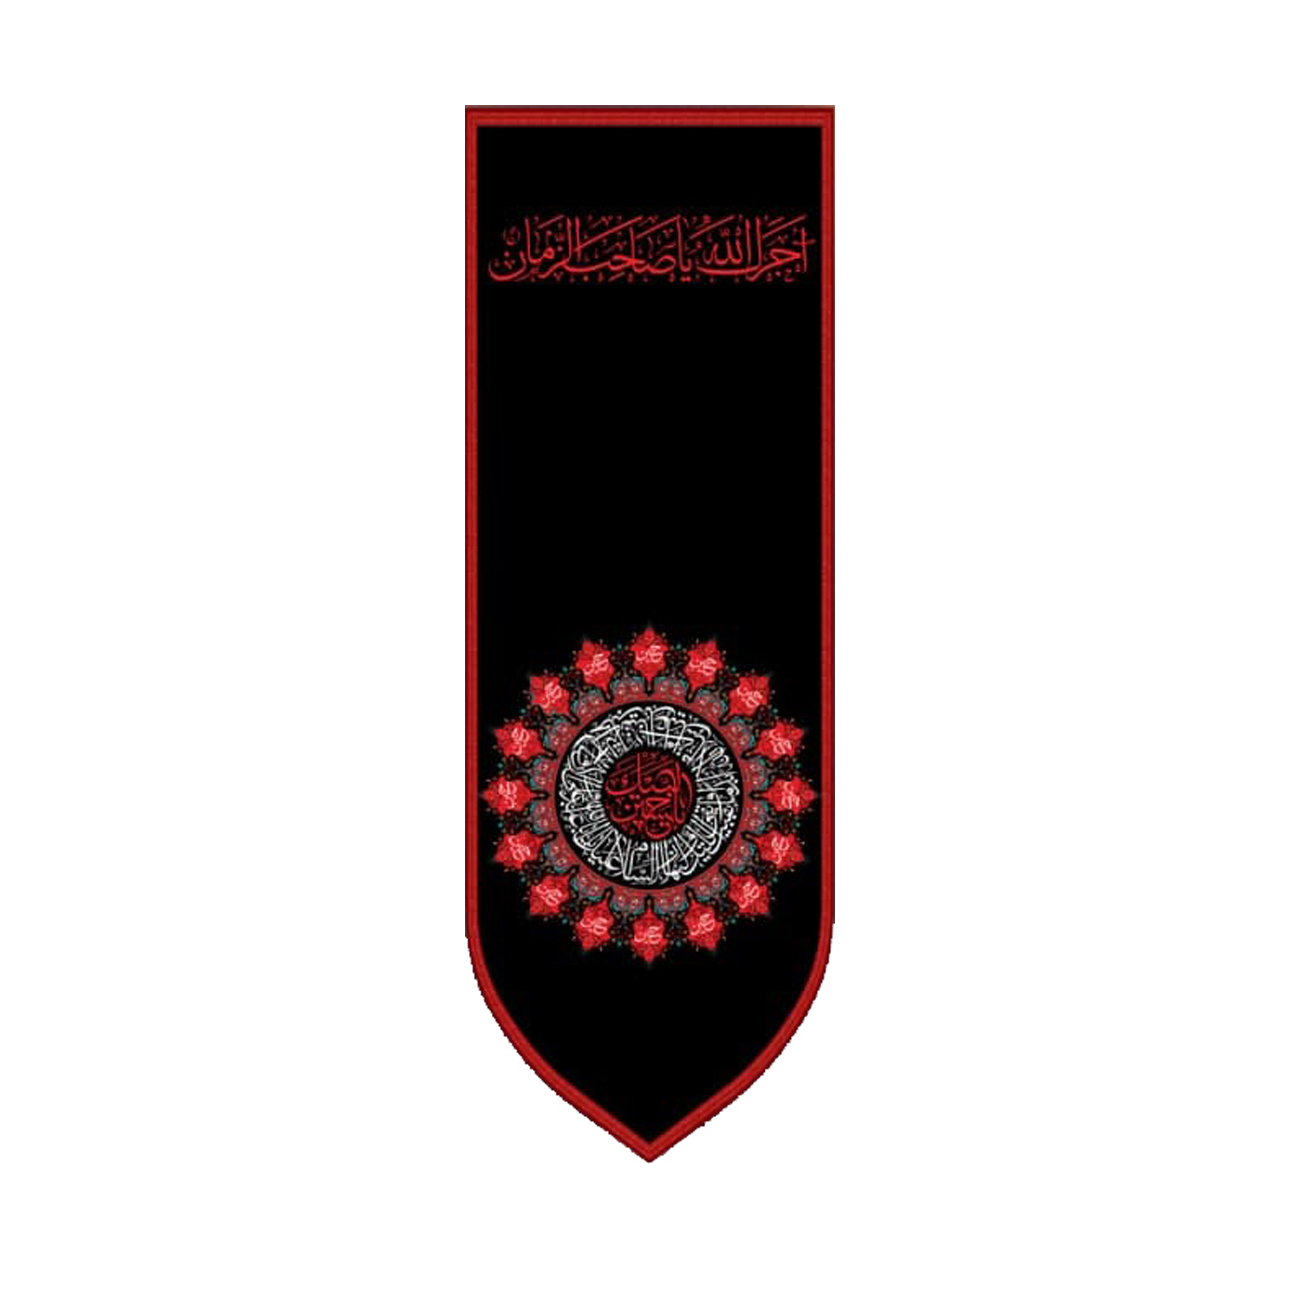 پرچم مدل آجرک الله یا صاحب الزمان کد 5000161-14050